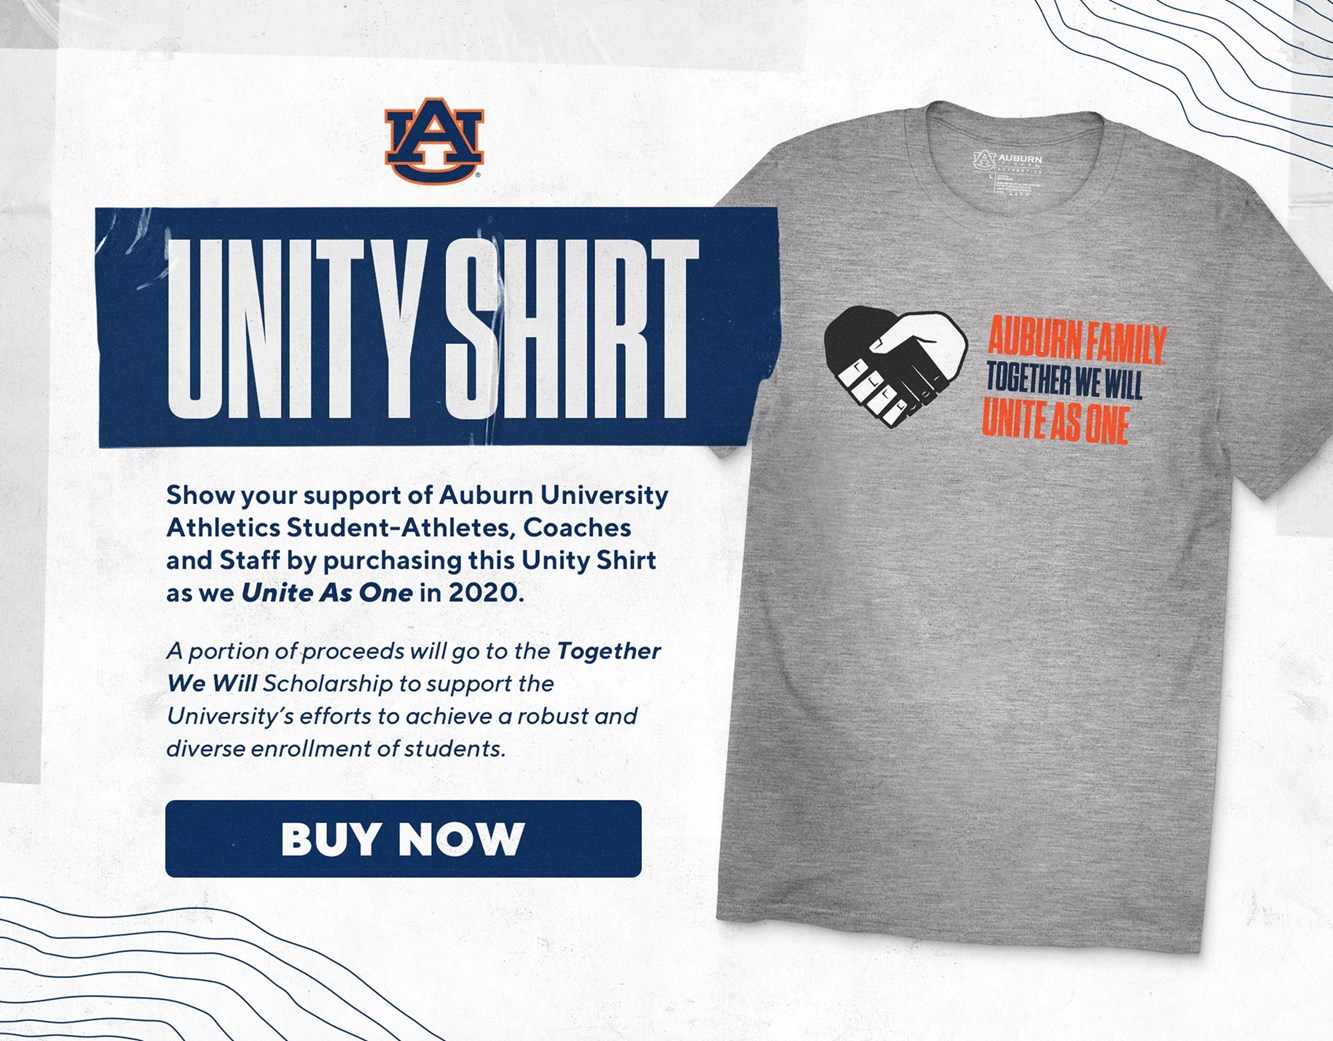 Auburn Unity T-shirt on sale, Auburn Family asked to wear Oct. 9